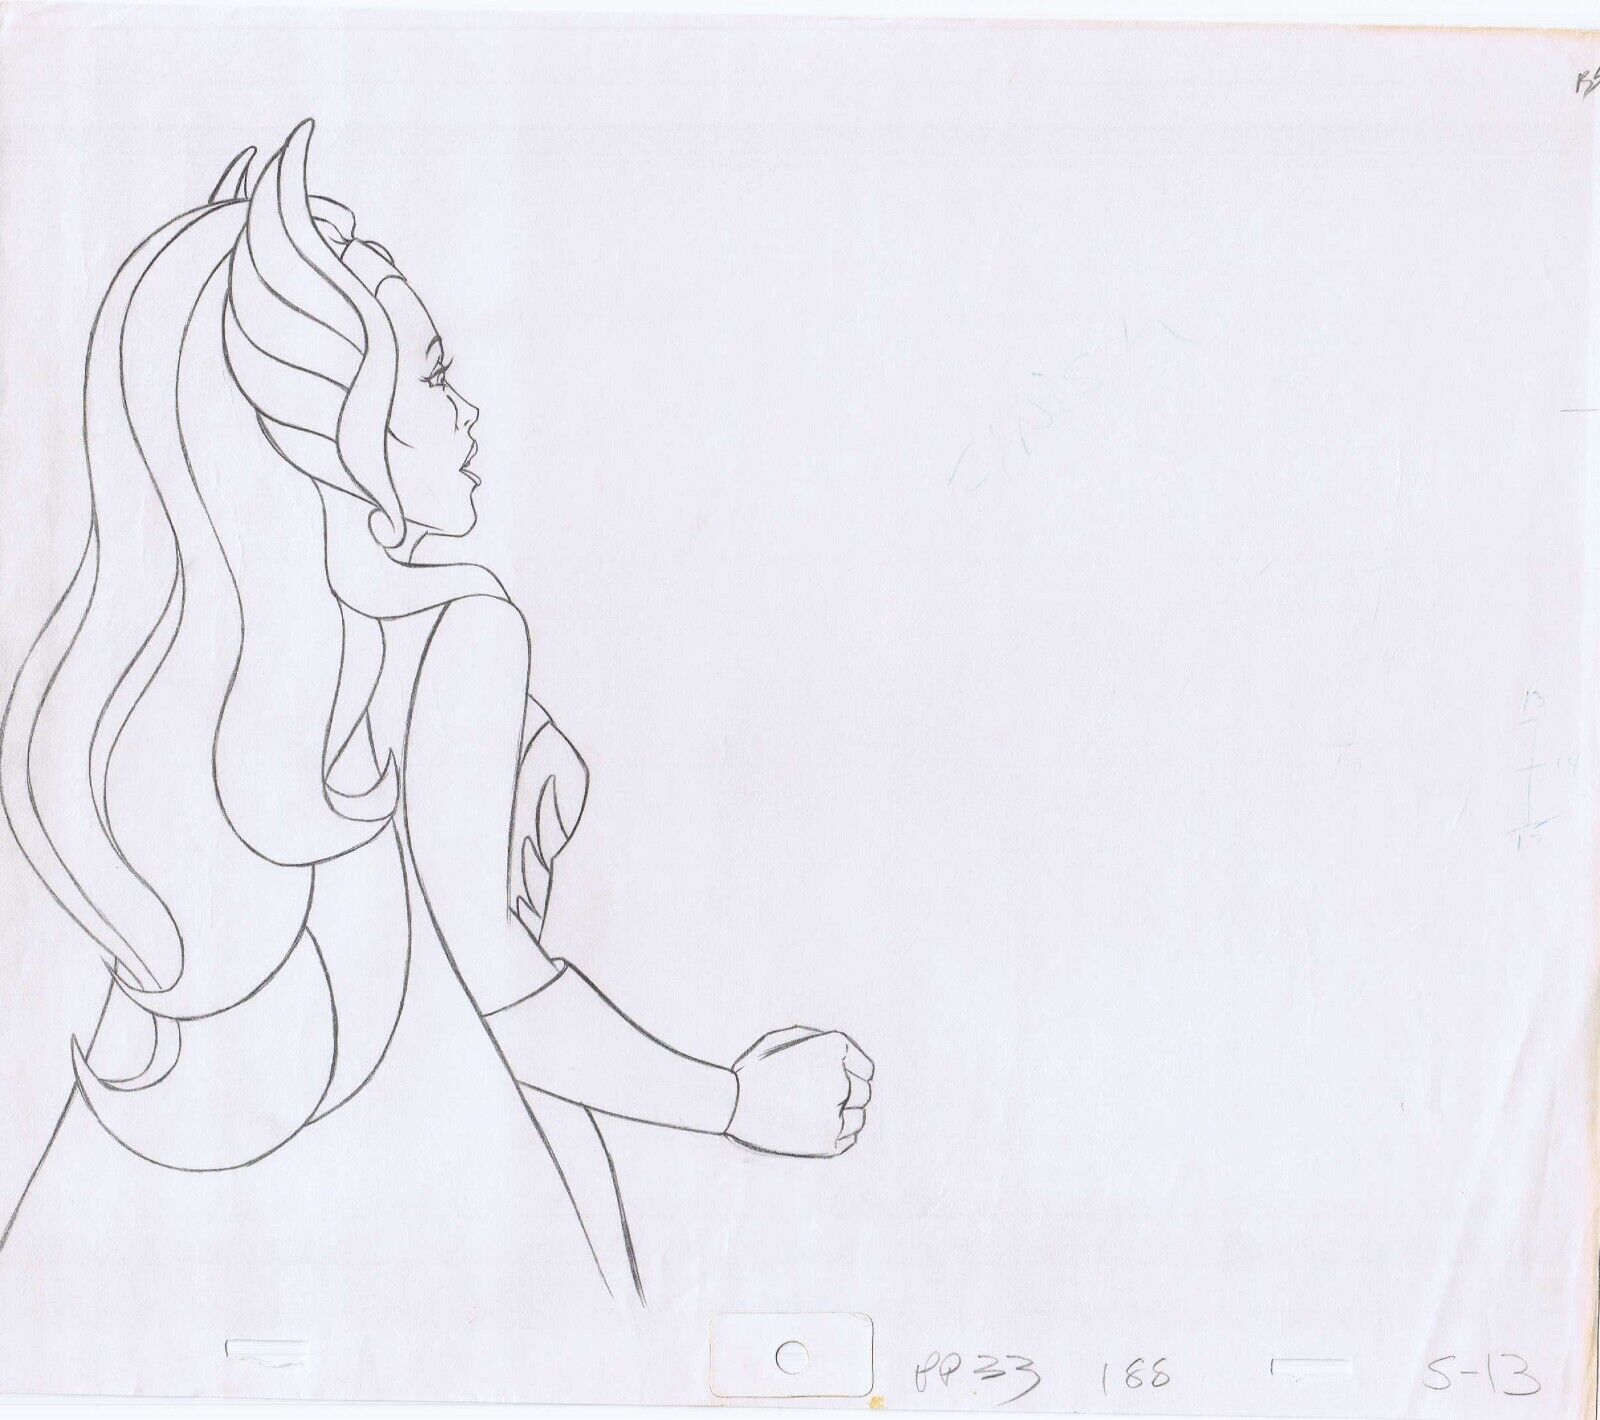 She-Ra 1985 Original Art w/COA Animation Production Pencils PP33 188 S-13